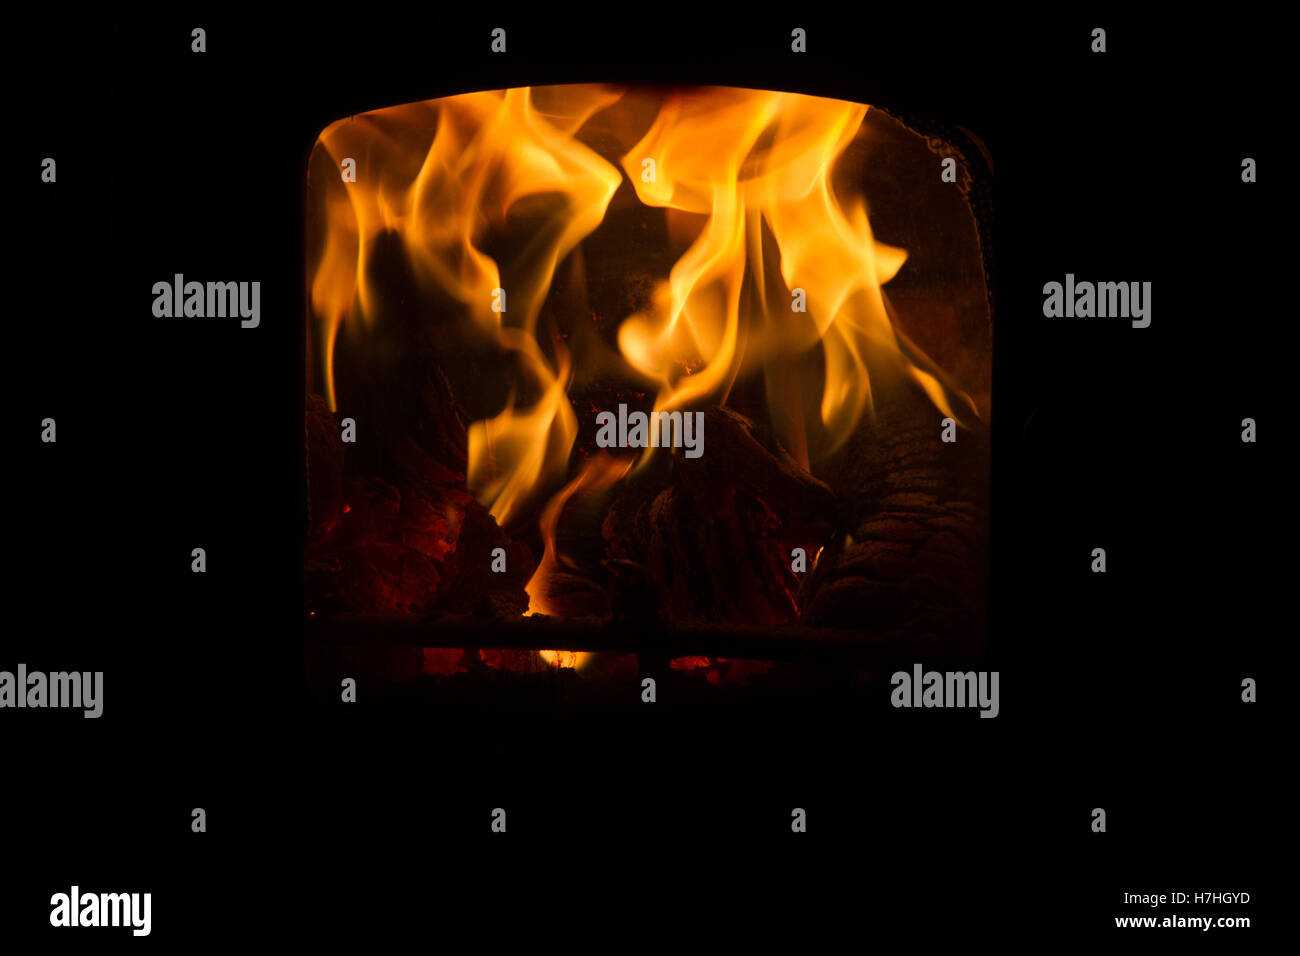 A fire in a log burner Stock Photo